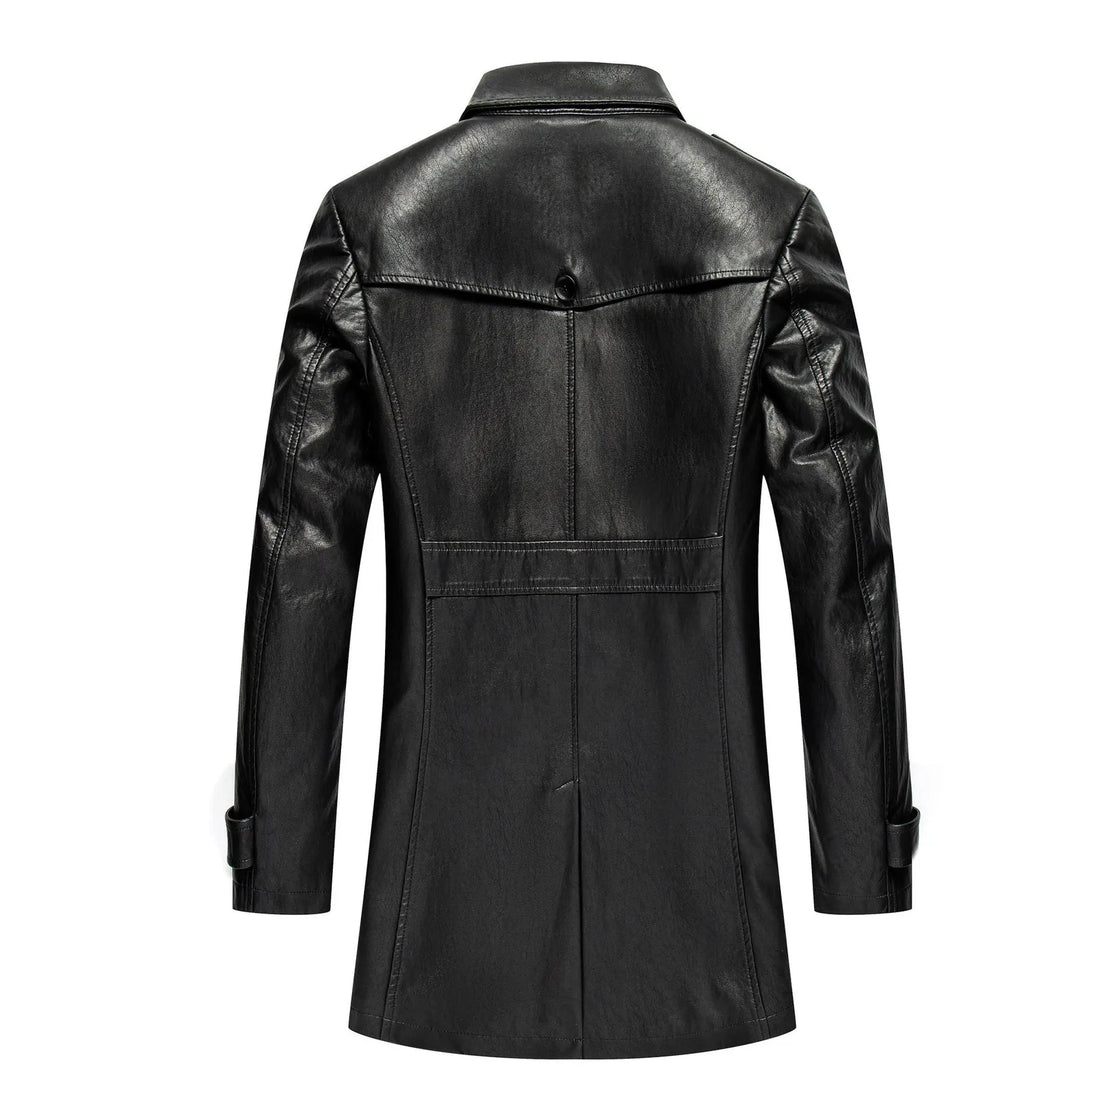 Men's Mid Length Black Leather Coat